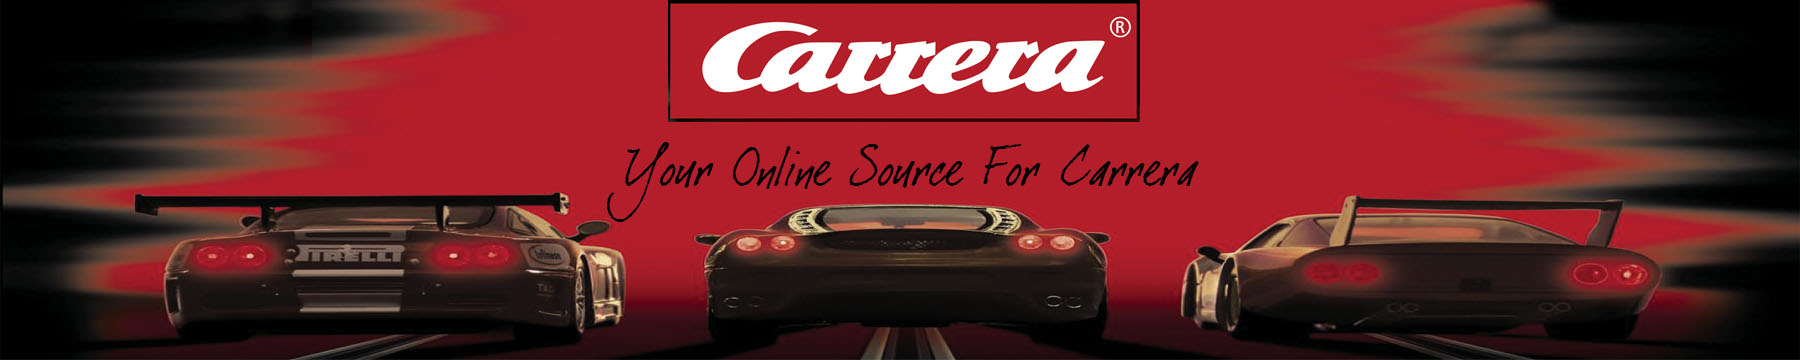 CARRERA OF AMERICA 20030023 Carrera Digital 132 1:32 Scale Race to Victory  Slot Car Sets | Summit Racing